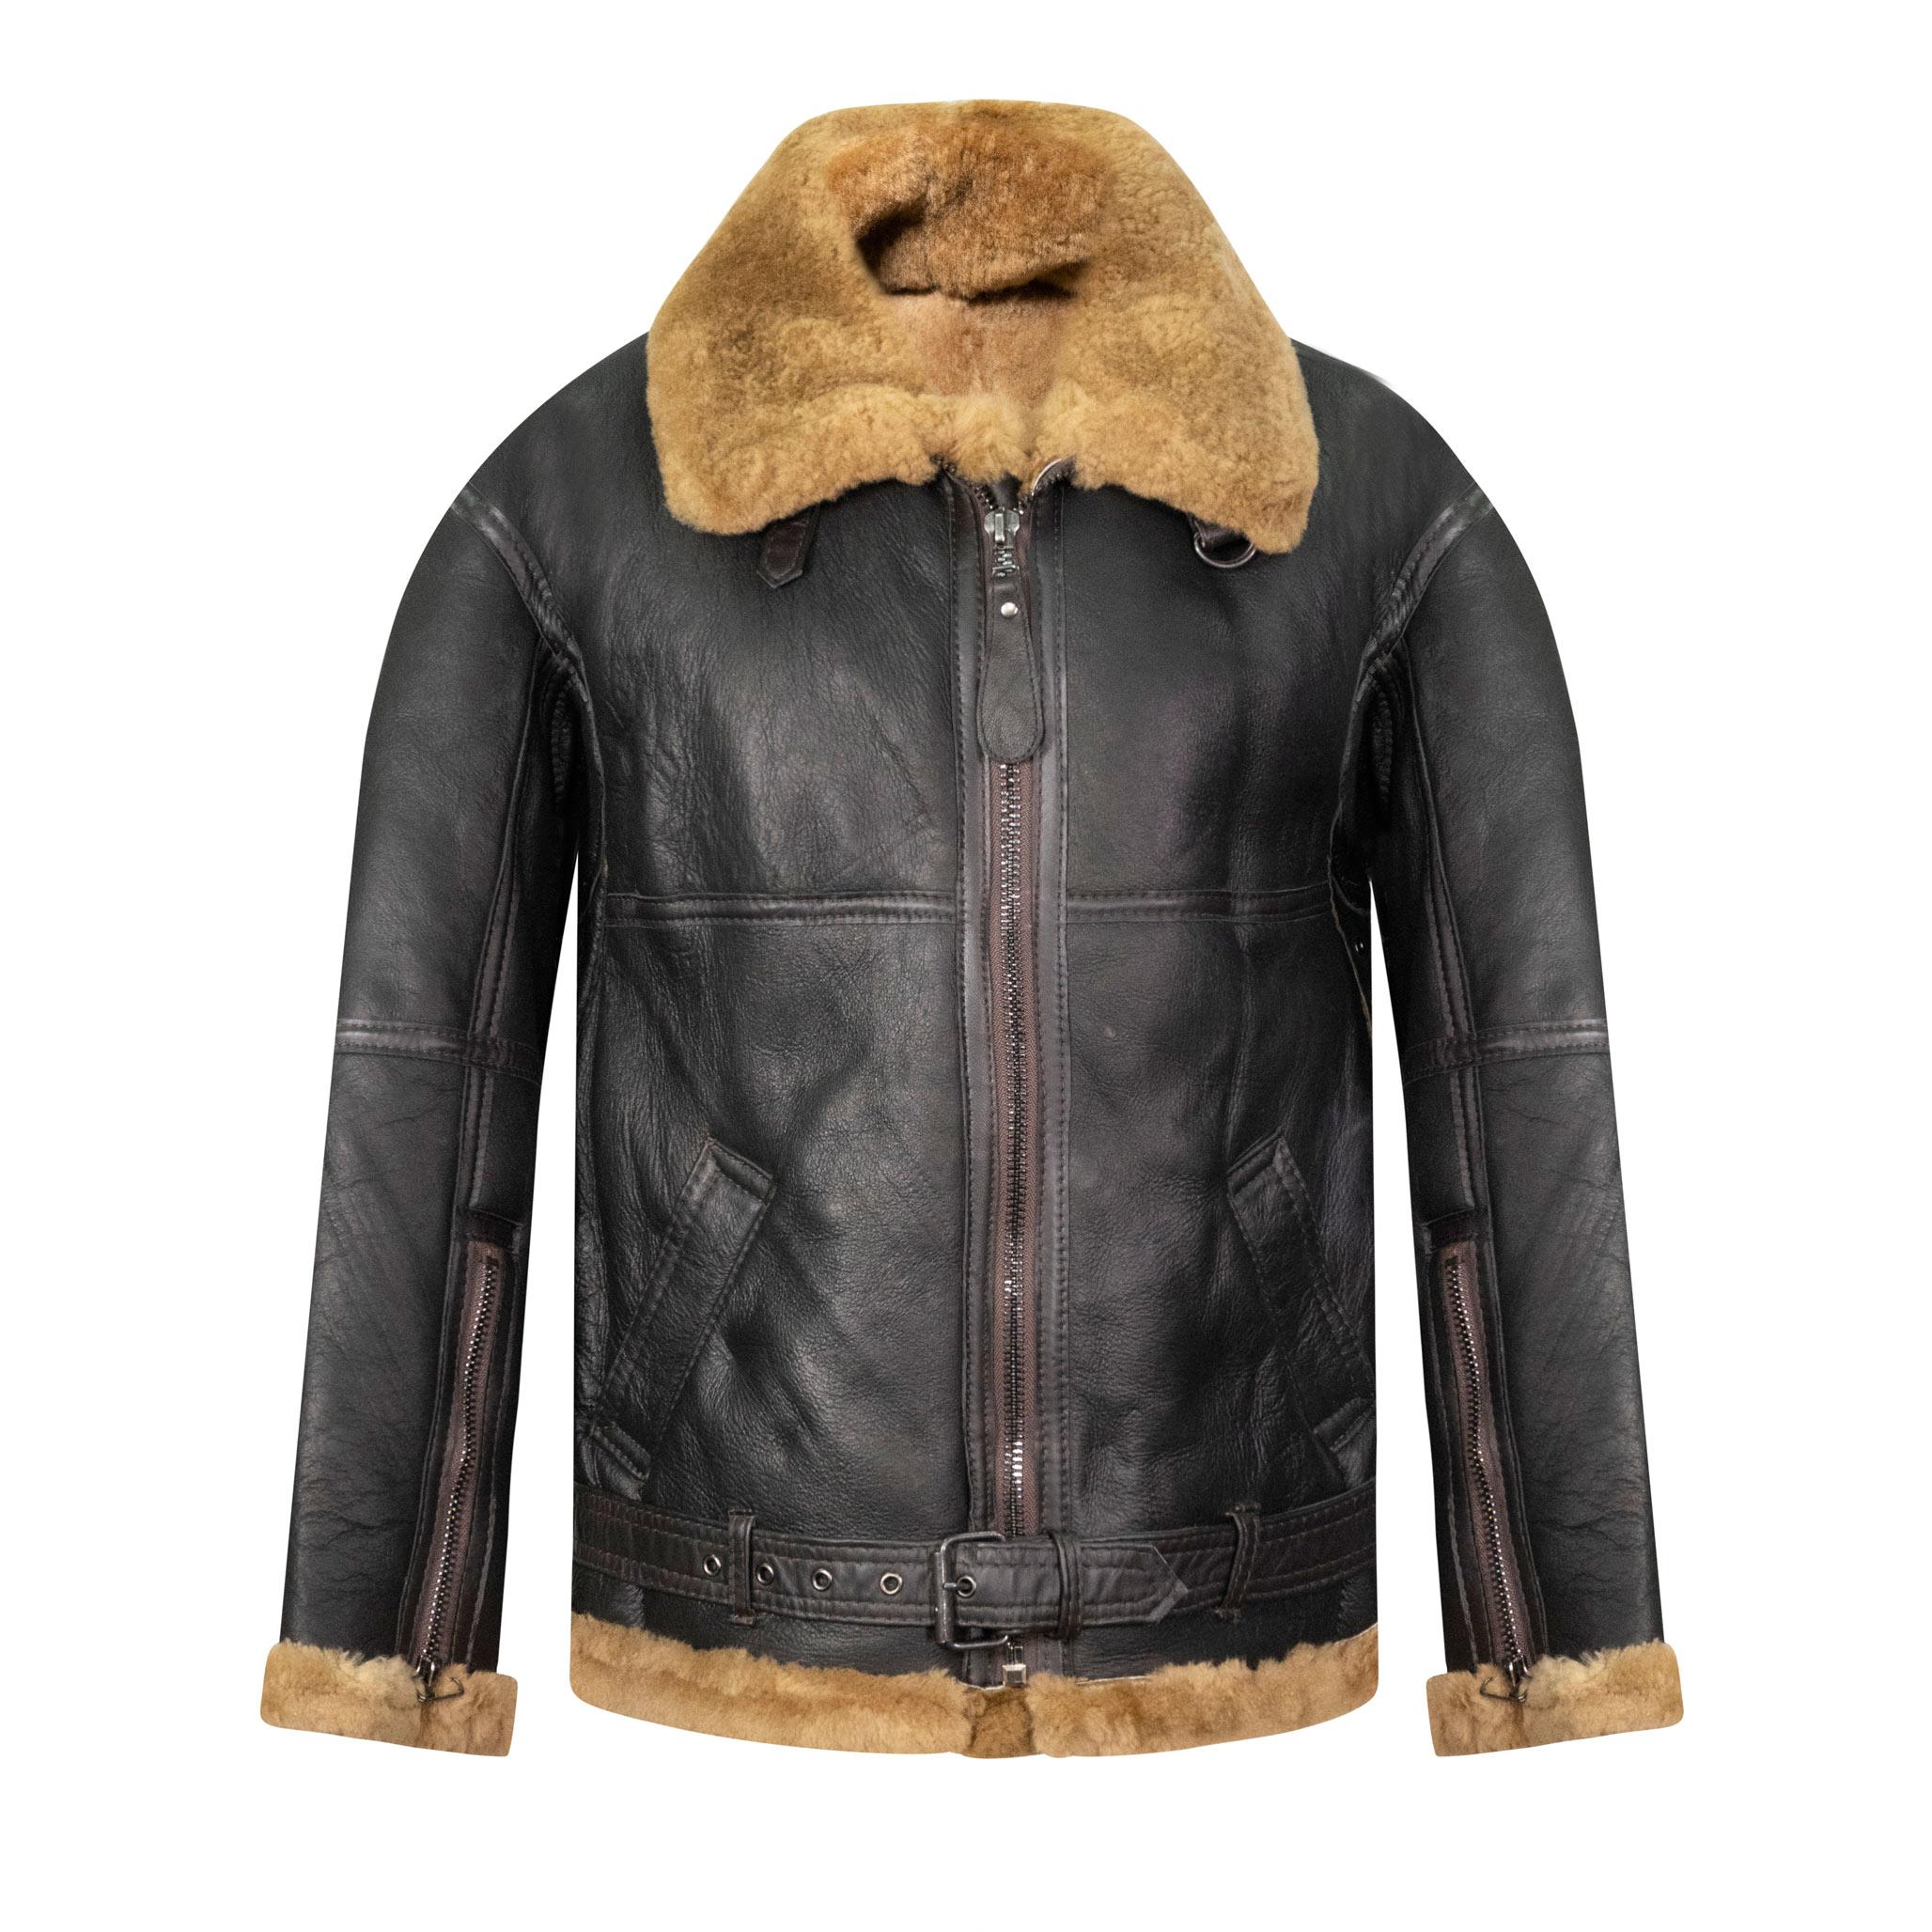 A dark brown sheepskin jacket, with thick ginger inner fur.